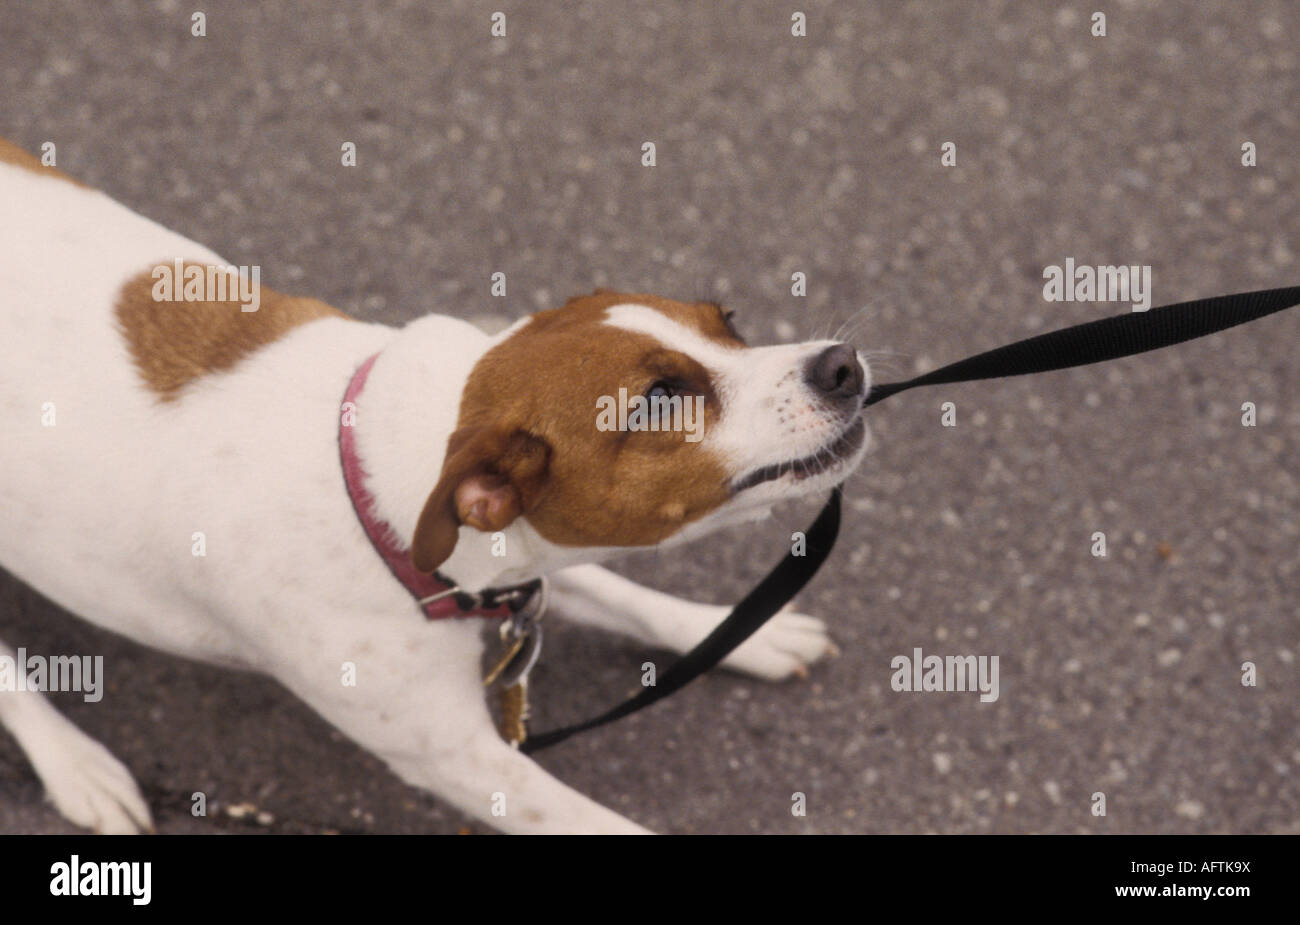 puppy biting on leash